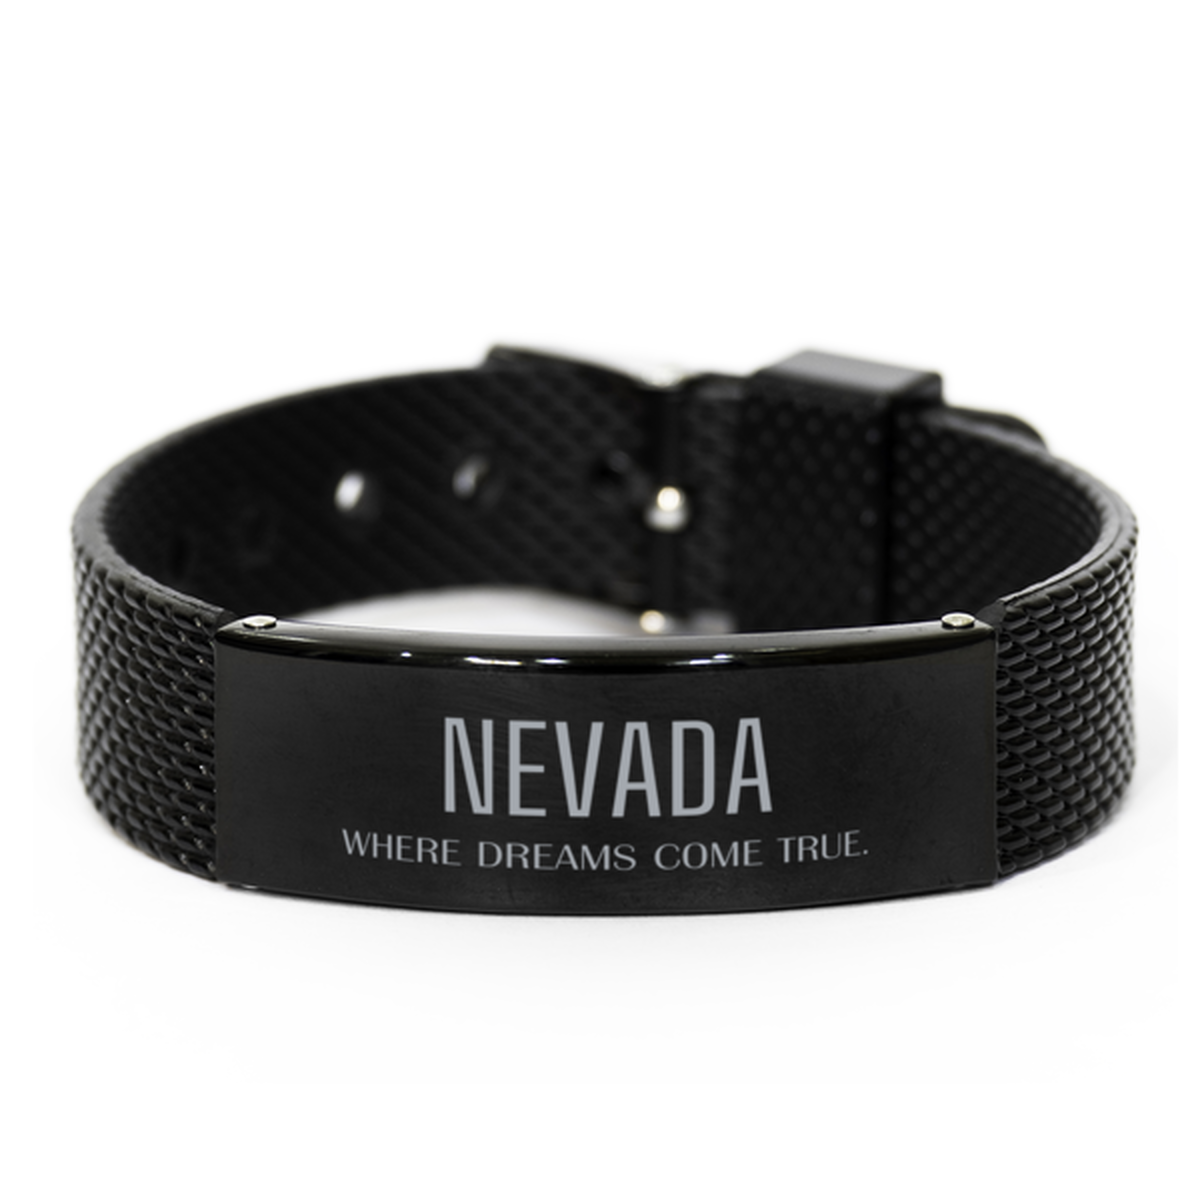 Love Nevada State Black Shark Mesh Bracelet, Nevada Where dreams come true, Birthday Inspirational Gifts For Nevada Men, Women, Friends